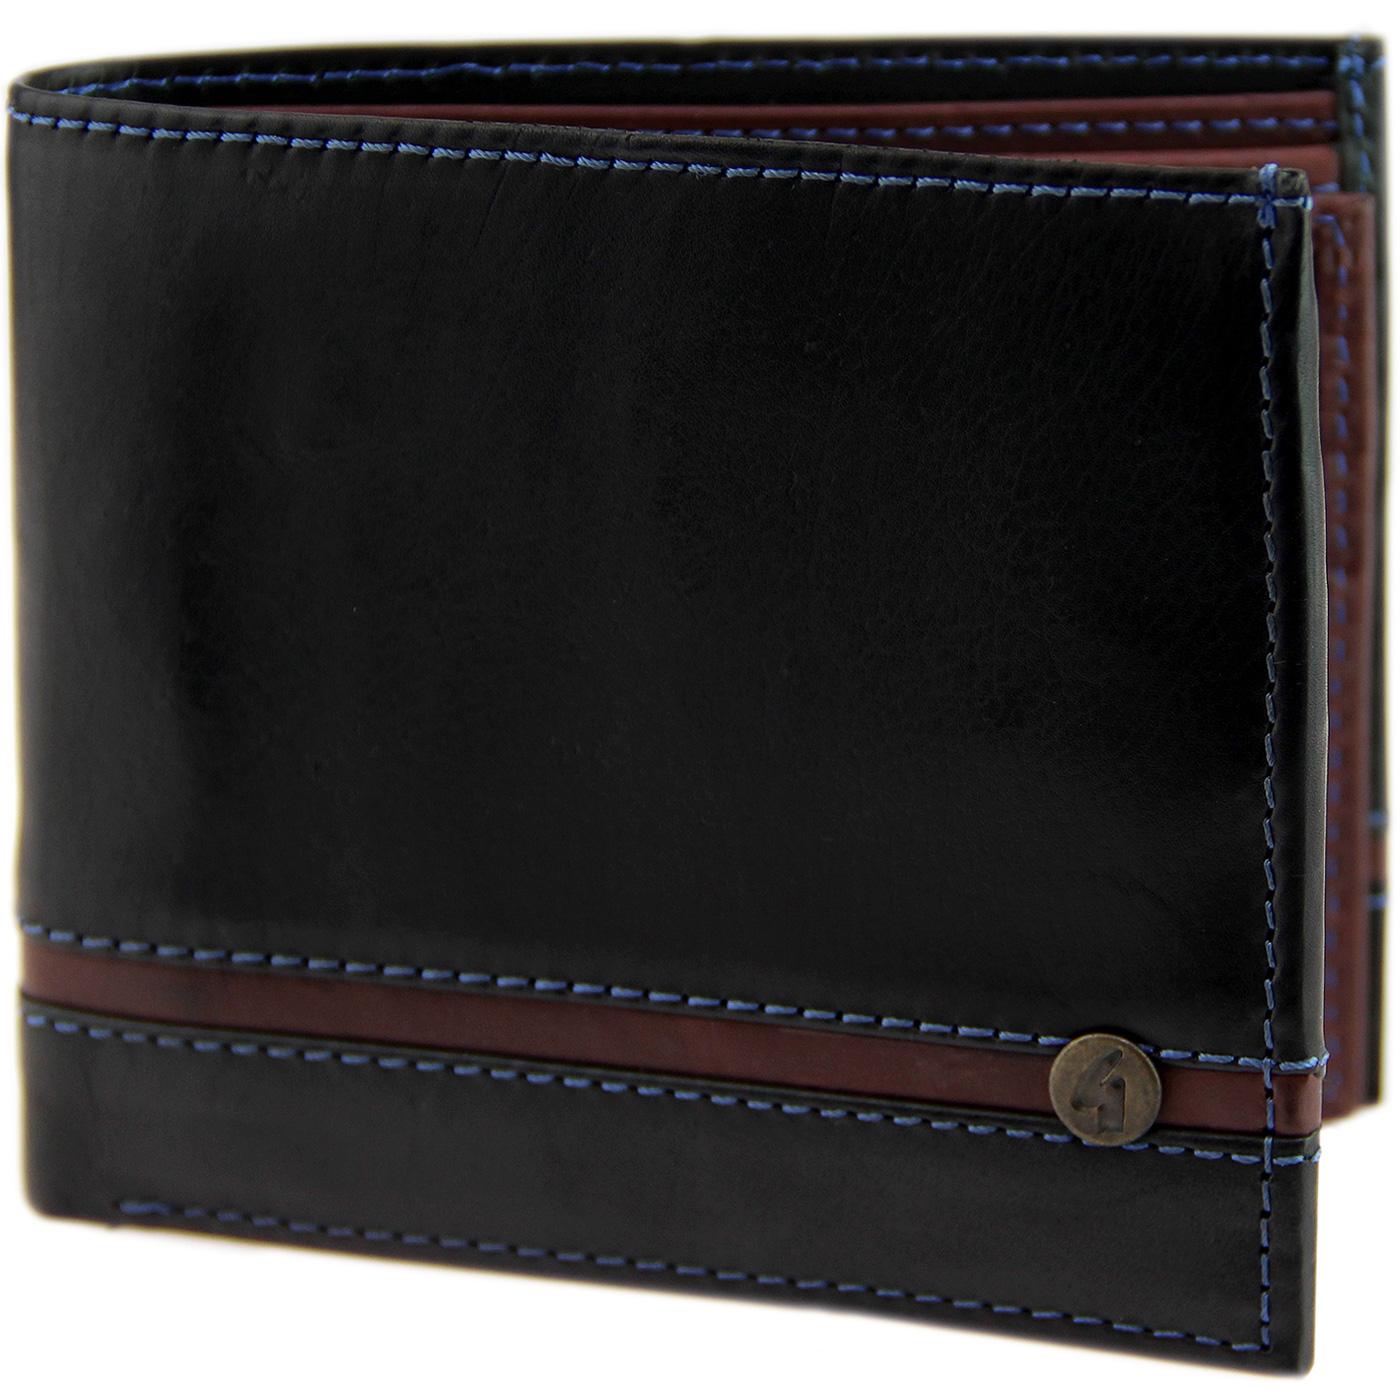 GABICCI VINTAGE Retro Leather Gatefold Wallet (B)